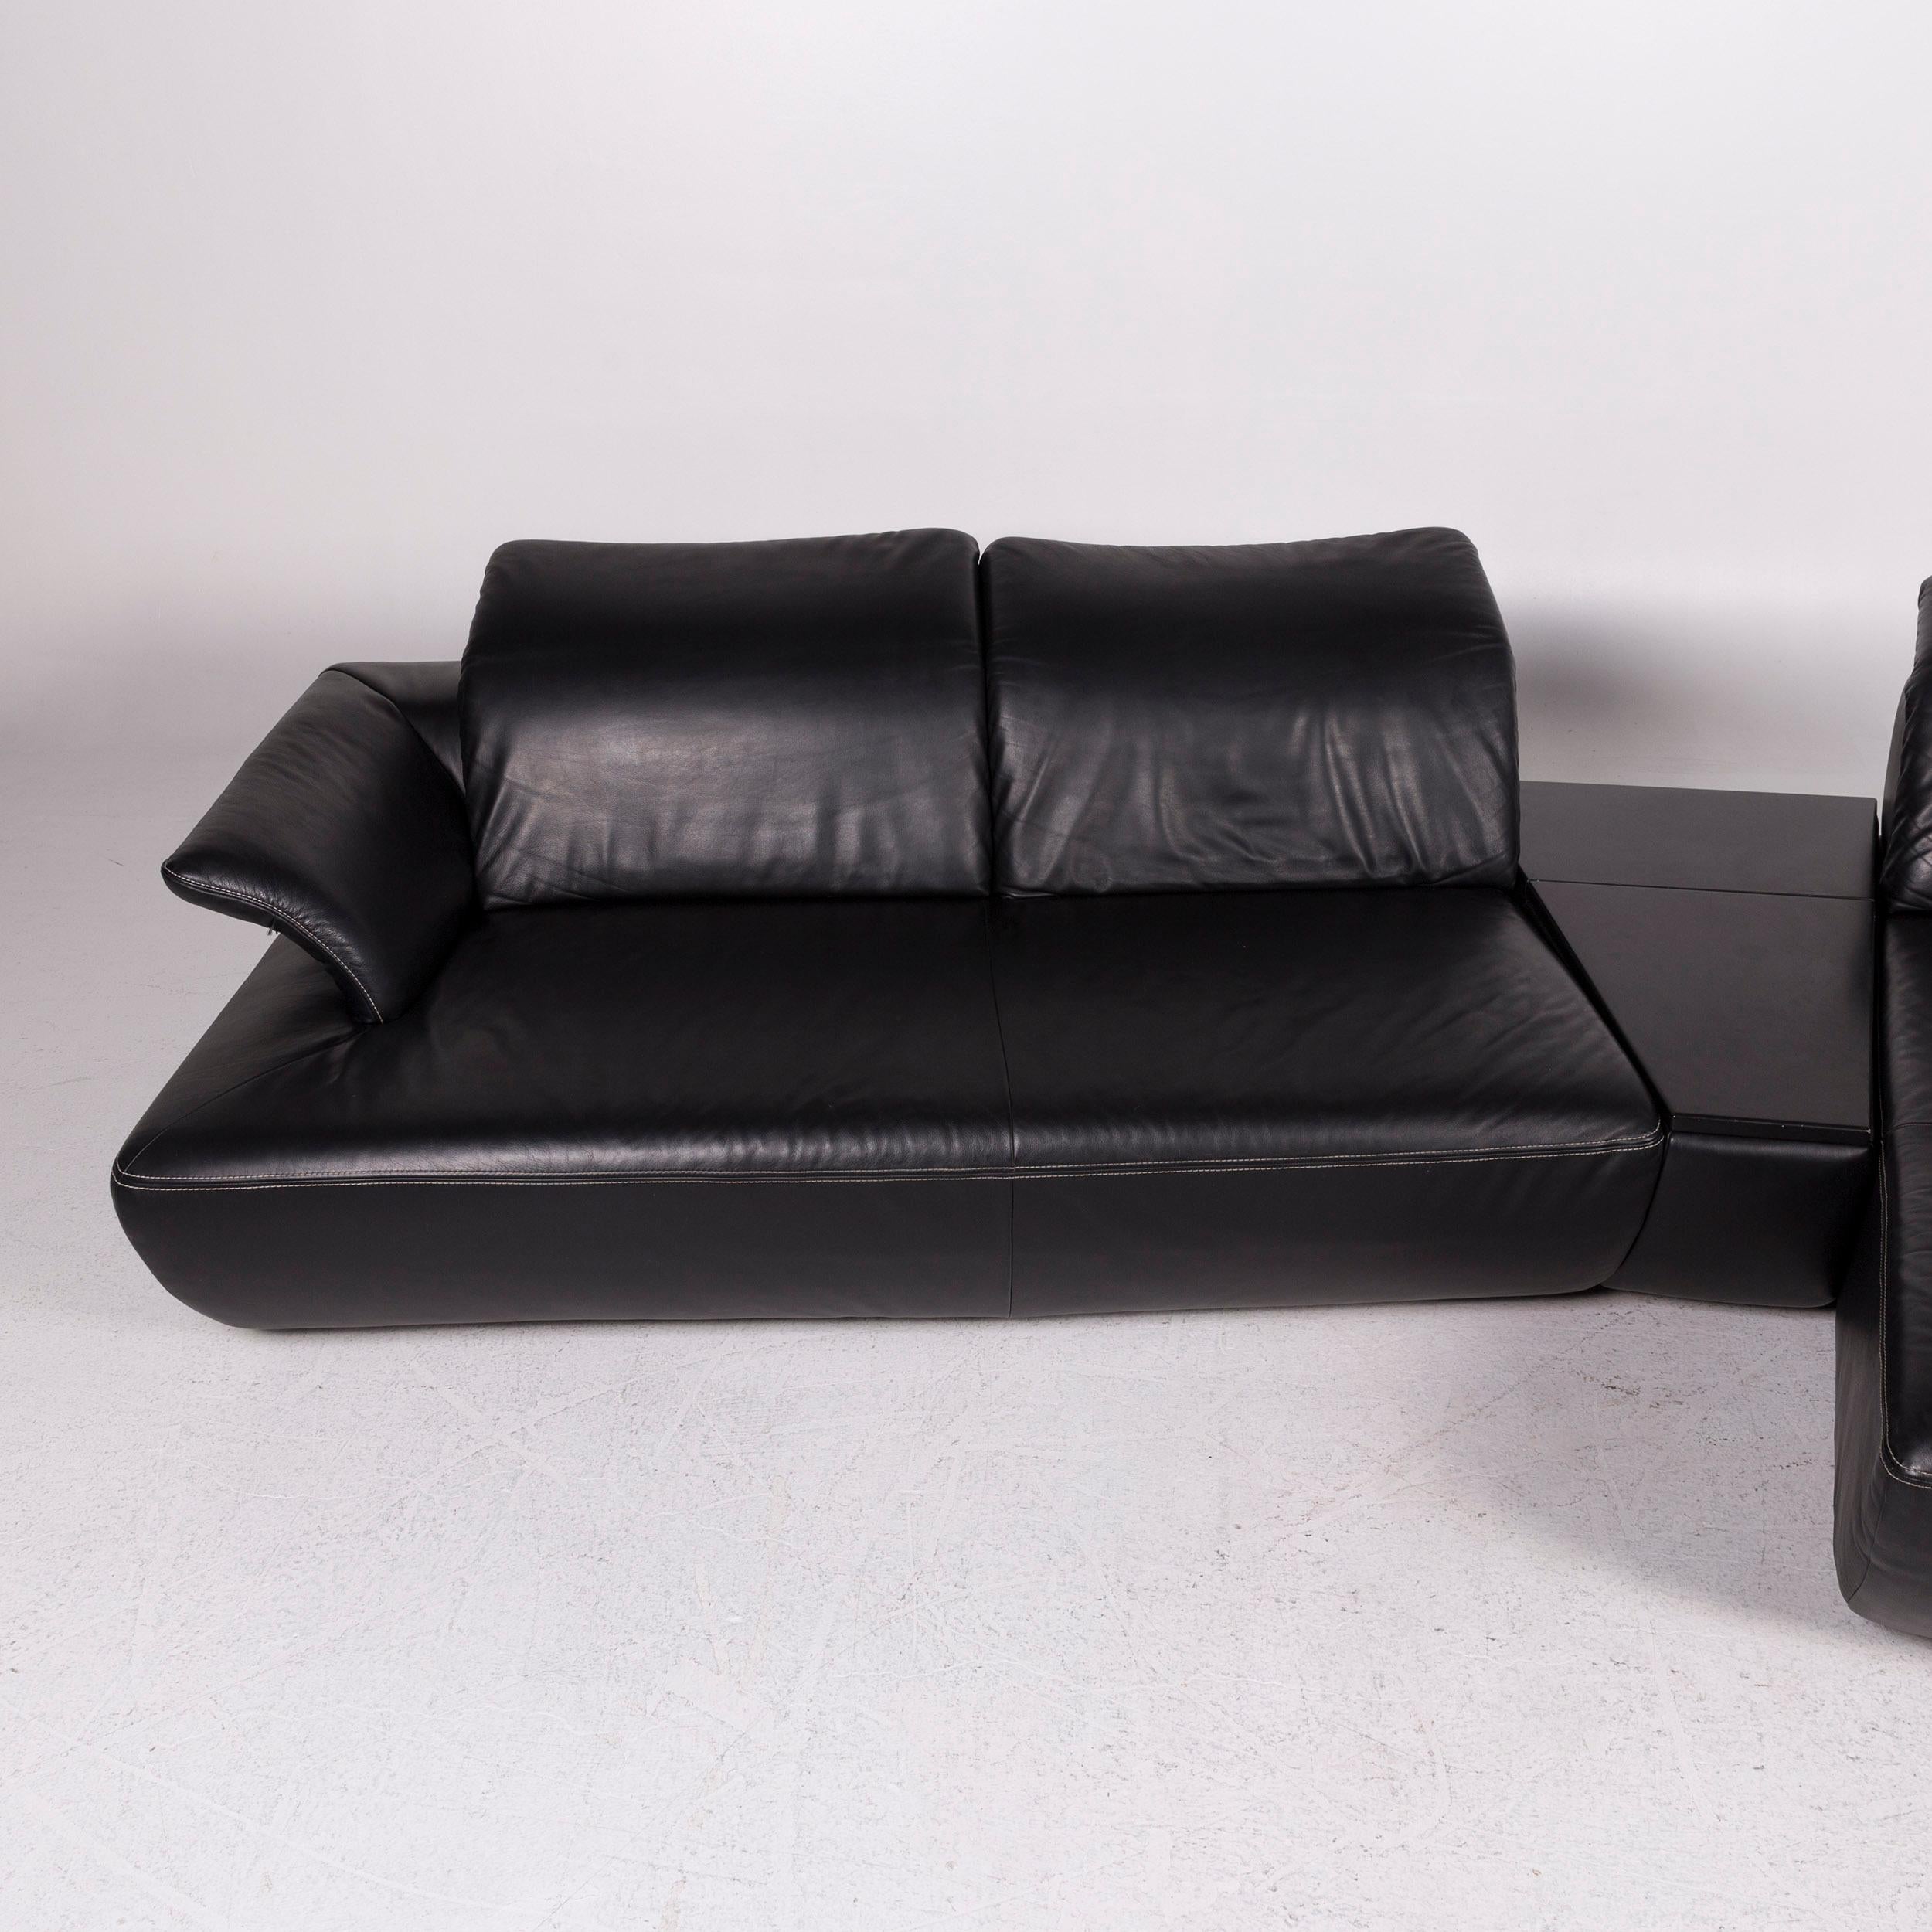 Koinor Avanti Leather Sofa Set Black 1 Corner Sofa 1 Stool Function 4